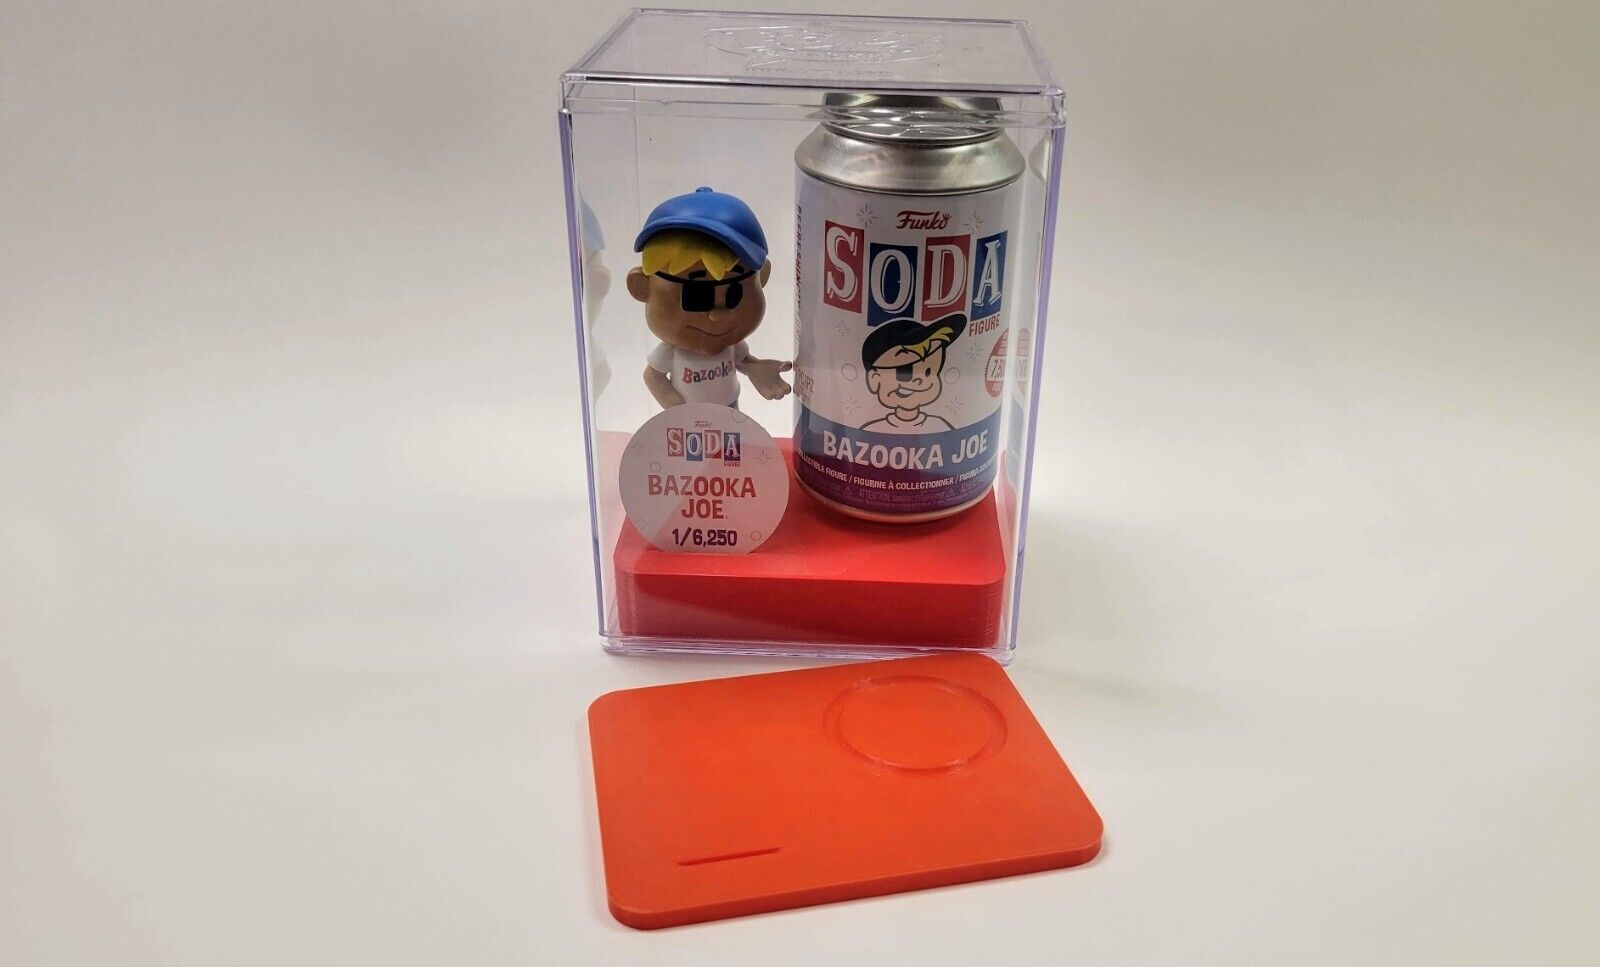 New Design - Funko Soda Box Style Display Stand - Fits Funko Display Cases